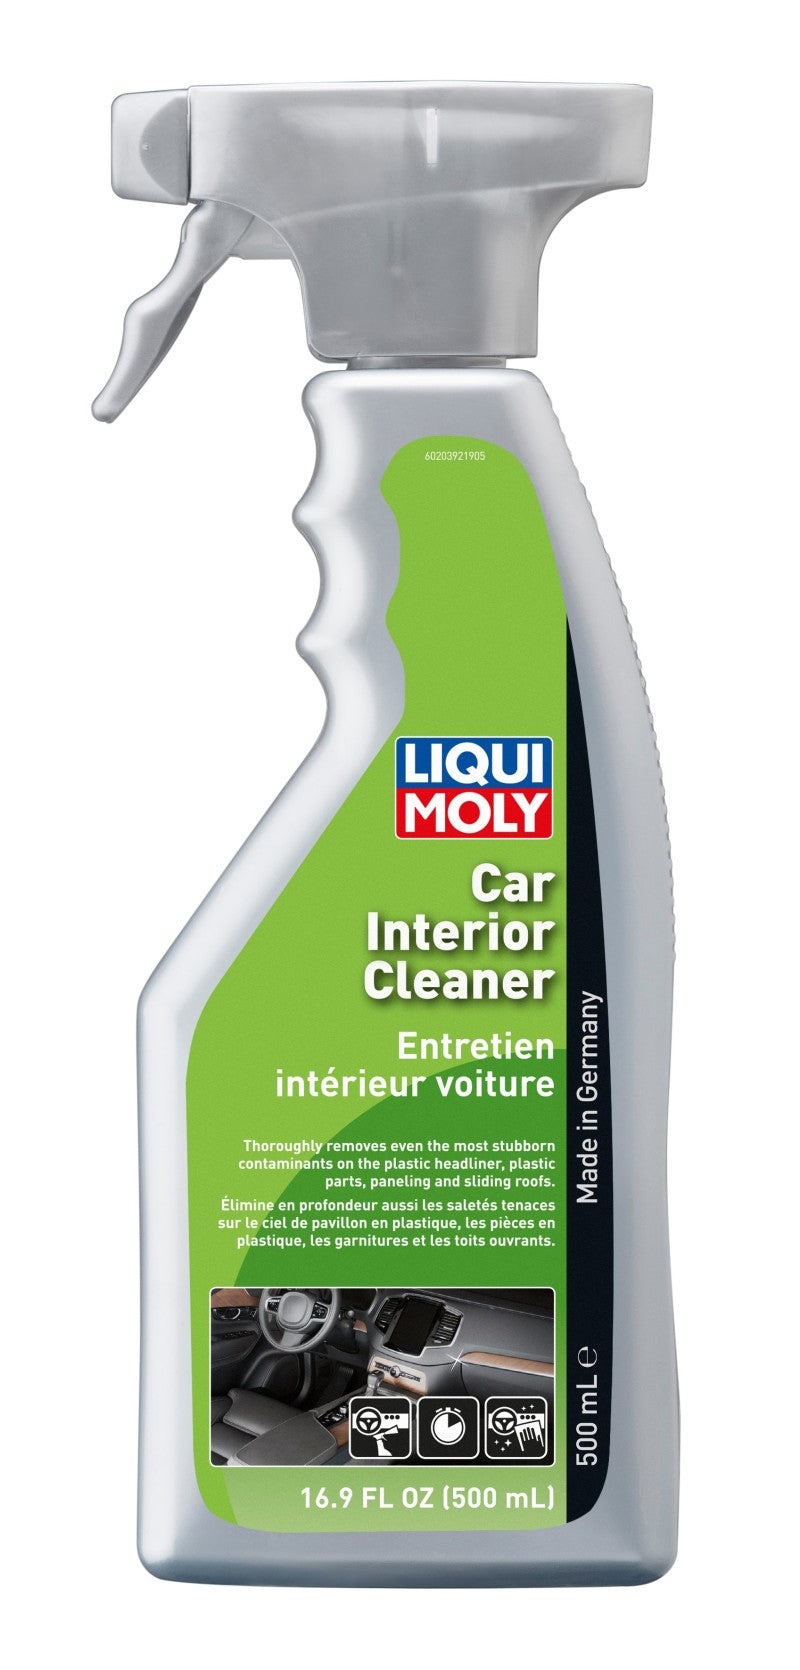 LIQUI MOLY 500mL Car Interior Cleaner.